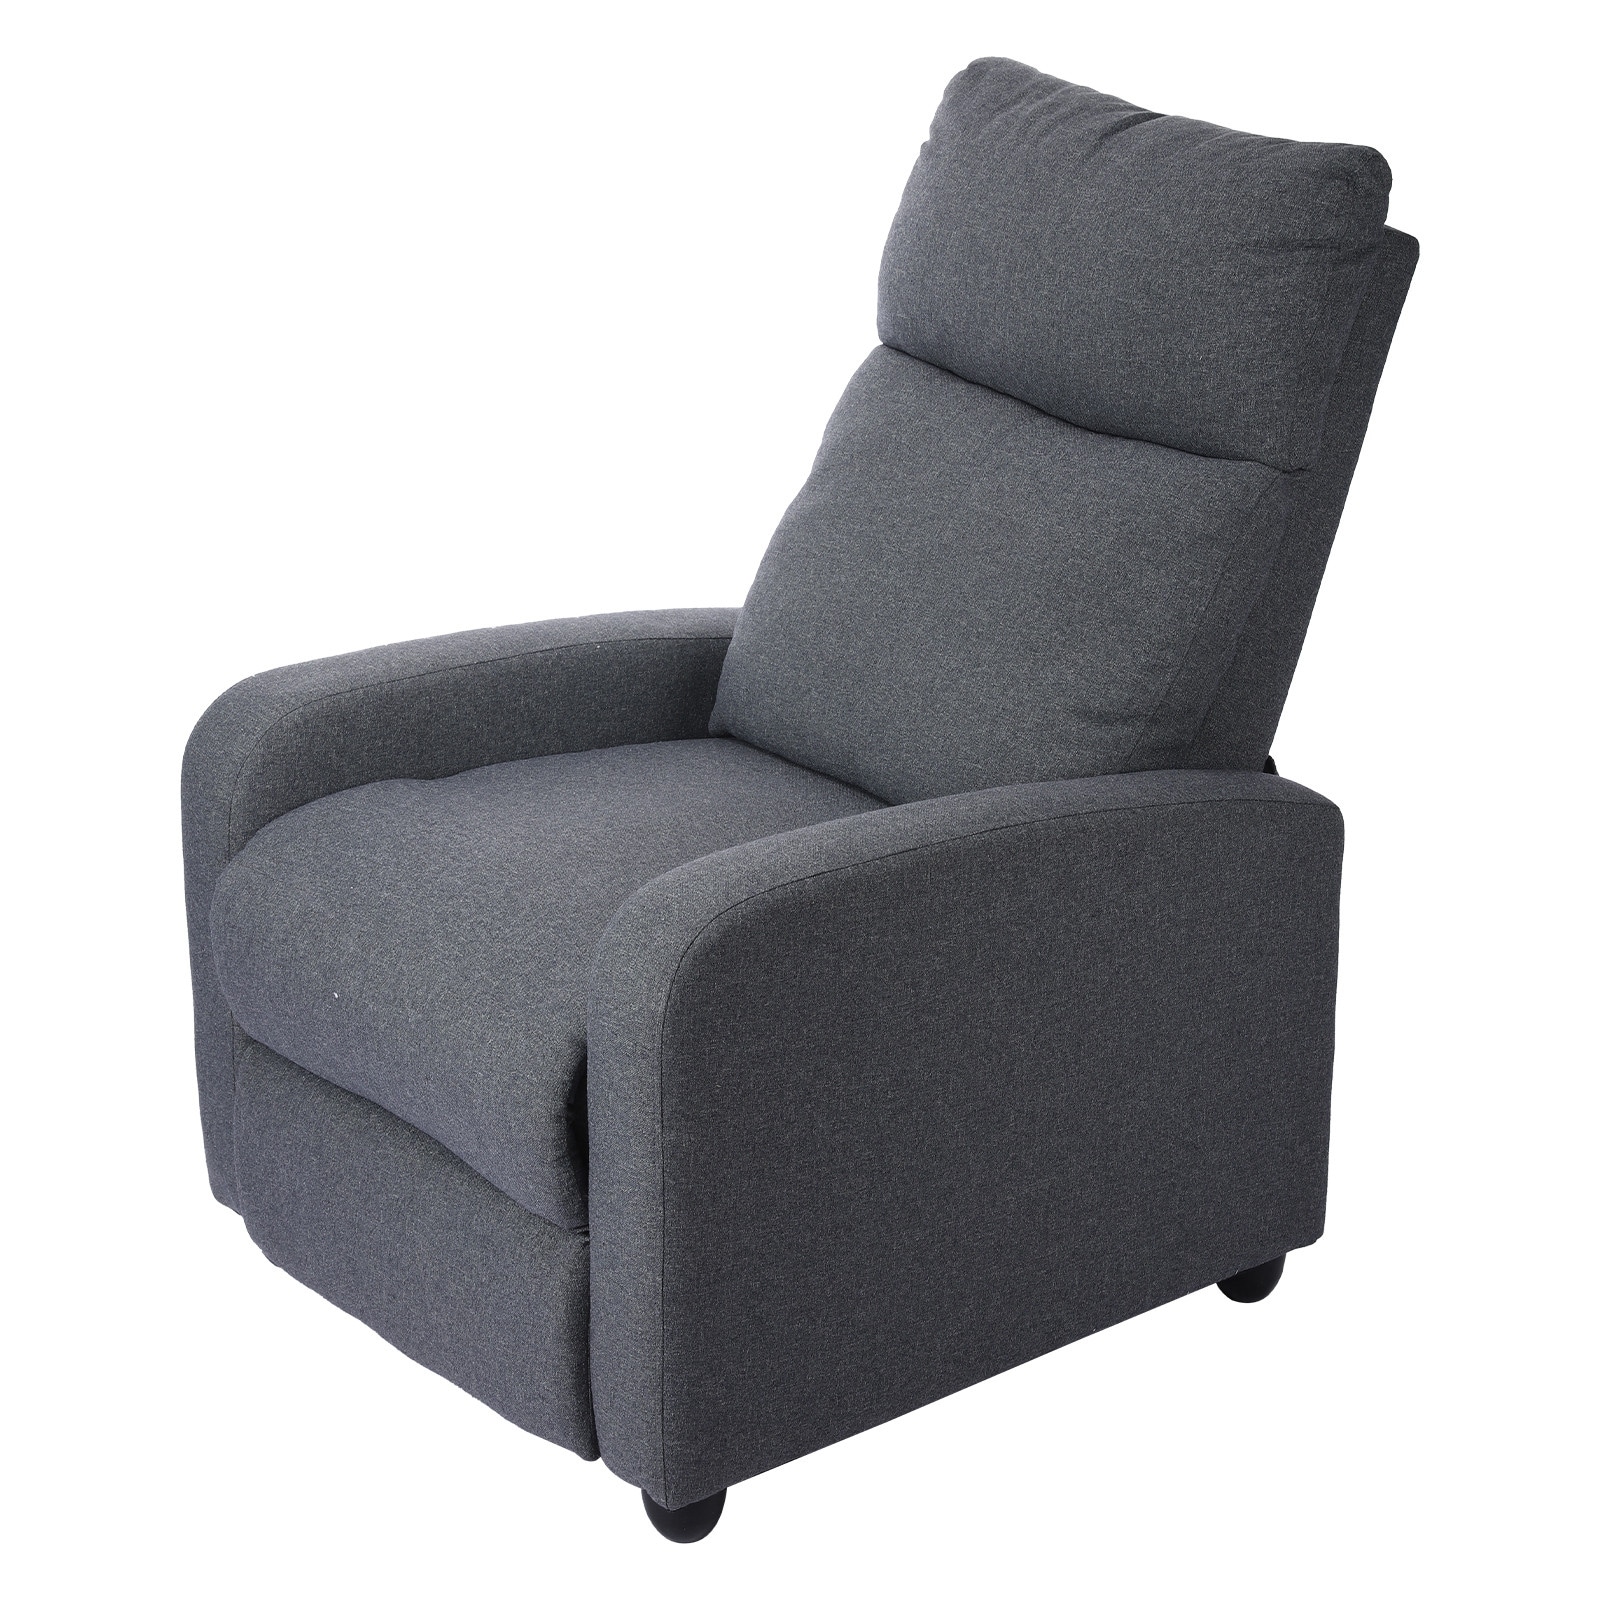 https://ak1.ostkcdn.com/images/products/is/images/direct/24b8192fc729b698812c055bf50694f5426ba812/Recliner-Chair-Ergonomic-Adjustable-Single-Fabric-Sofa-w-Thicker-Seat-Cushion.jpg